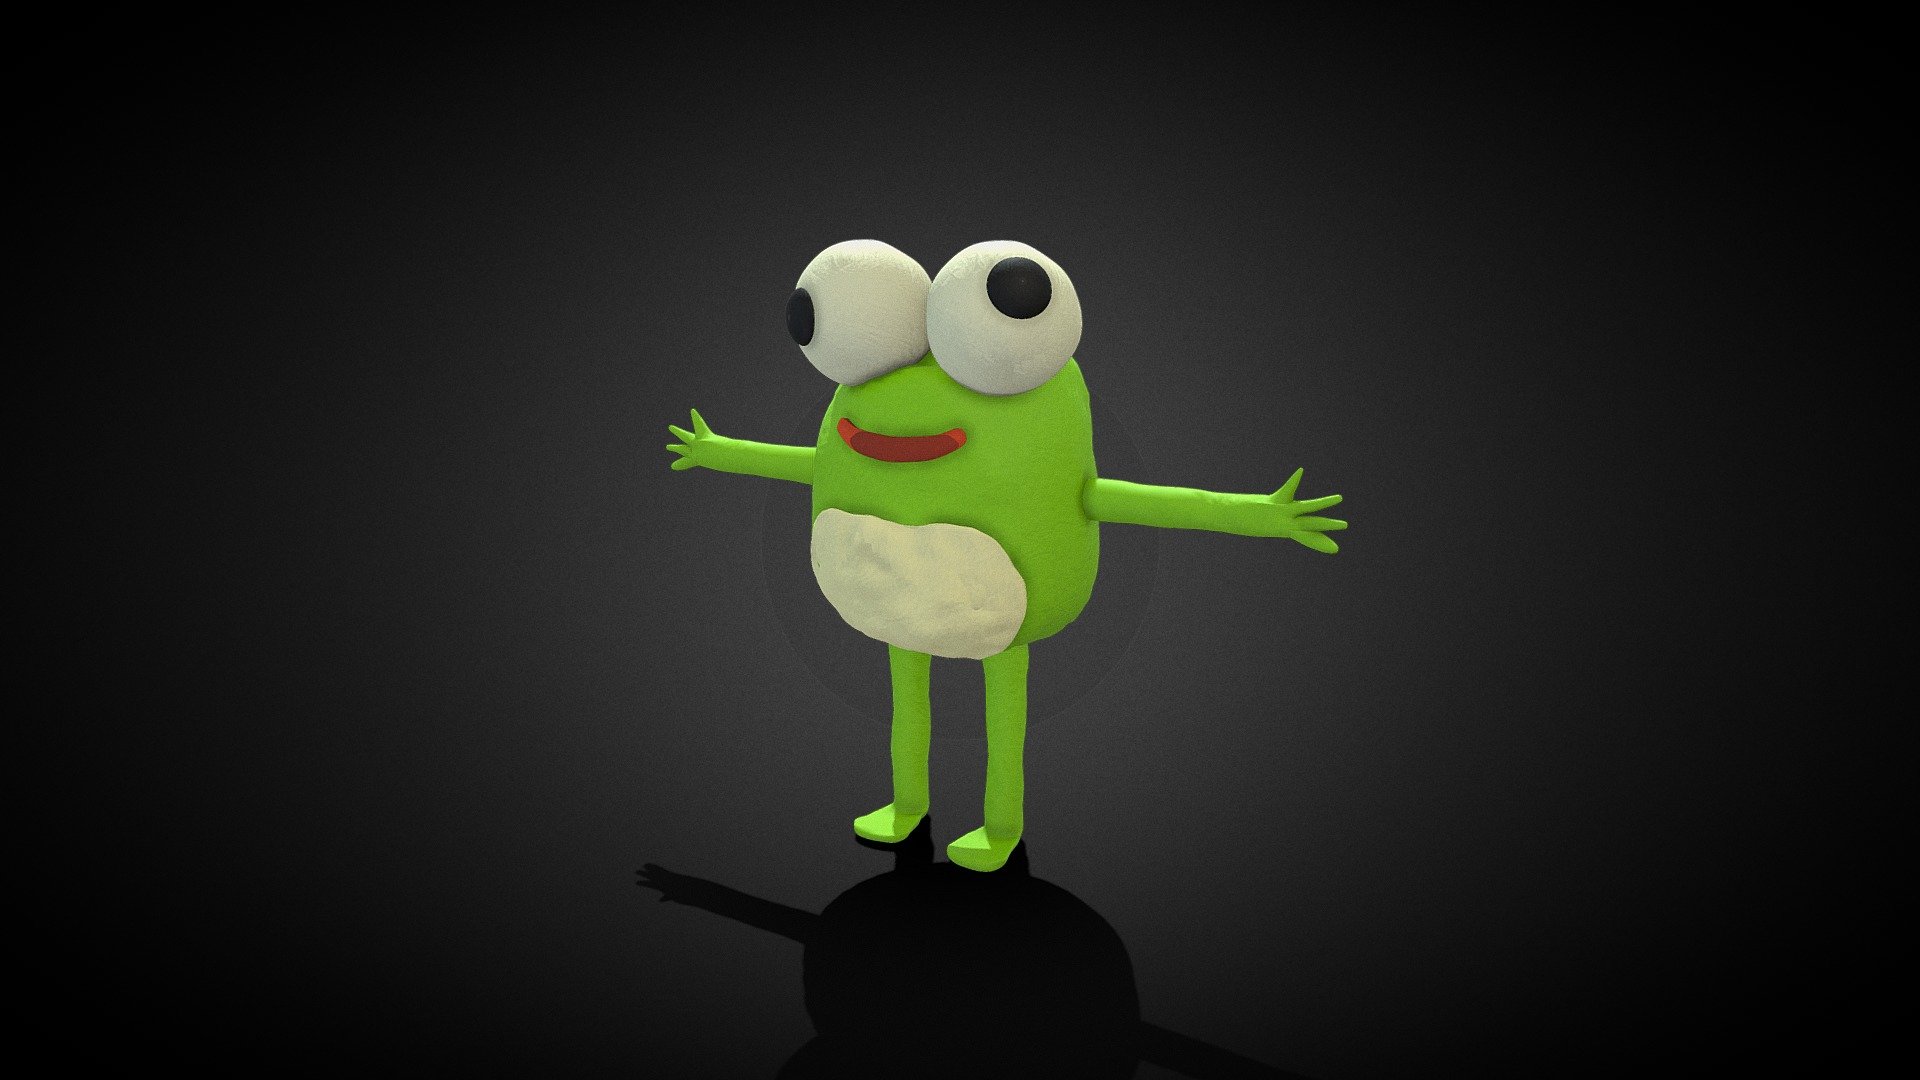 frog plastilin low poly model - Download Free 3D model by Sqtime |kianu ...